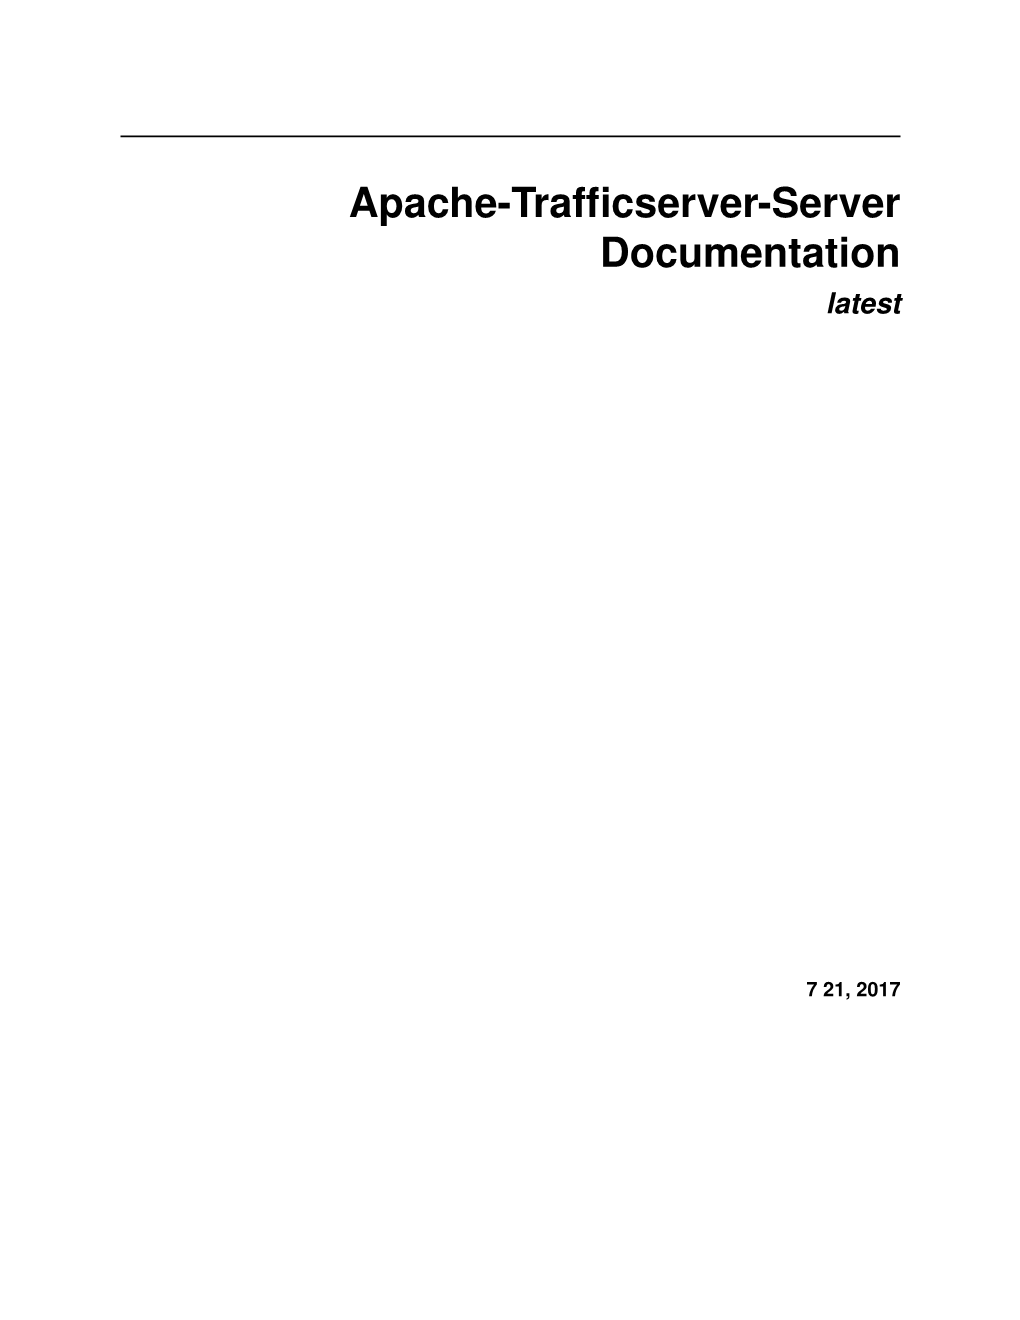 Apache-Trafficserver-Server Documentation